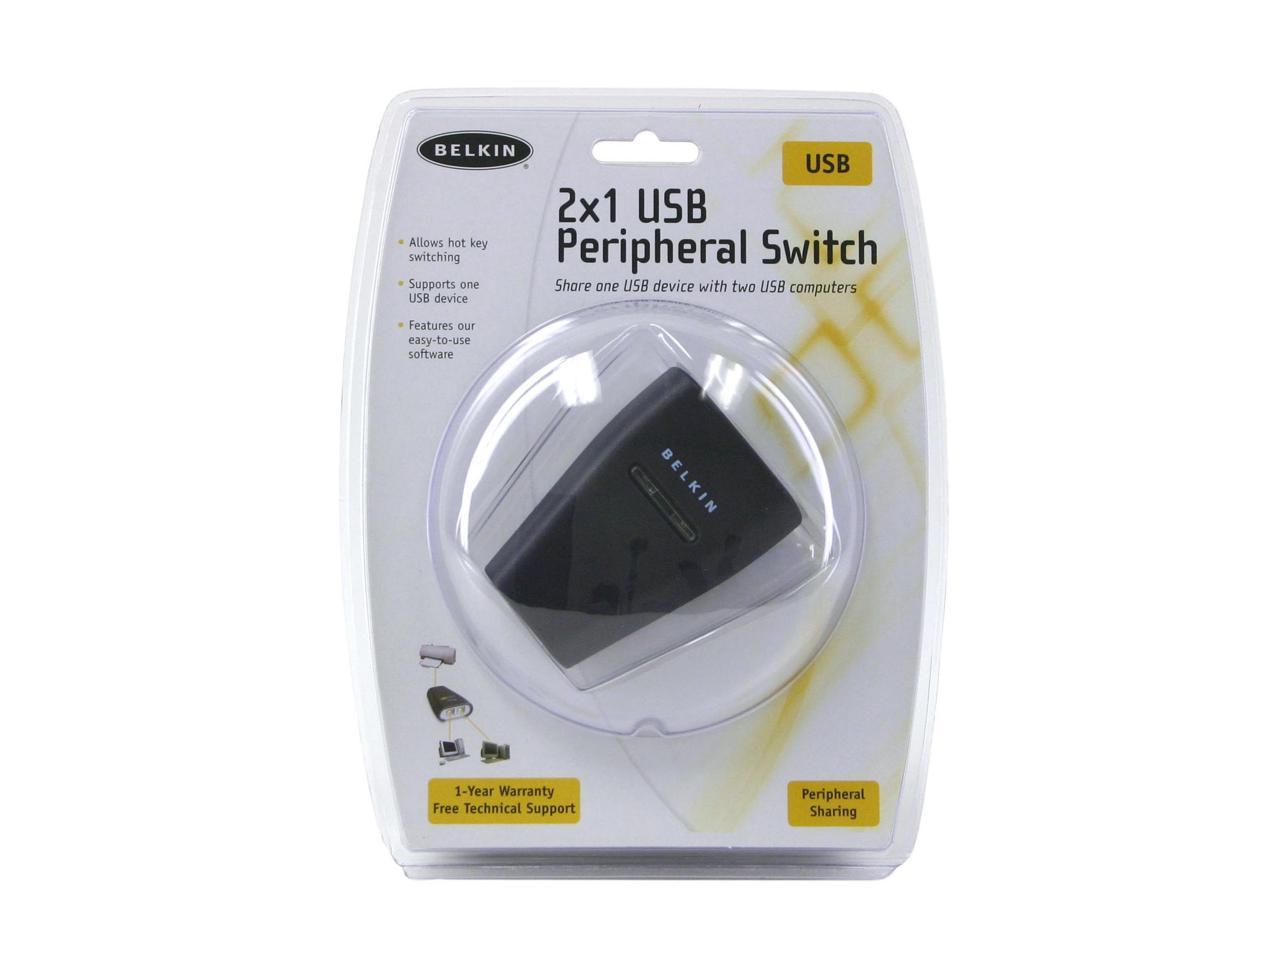 Belkin 2x1 USB Peripheral Switch USB peripheral sharing switch 2 ports 